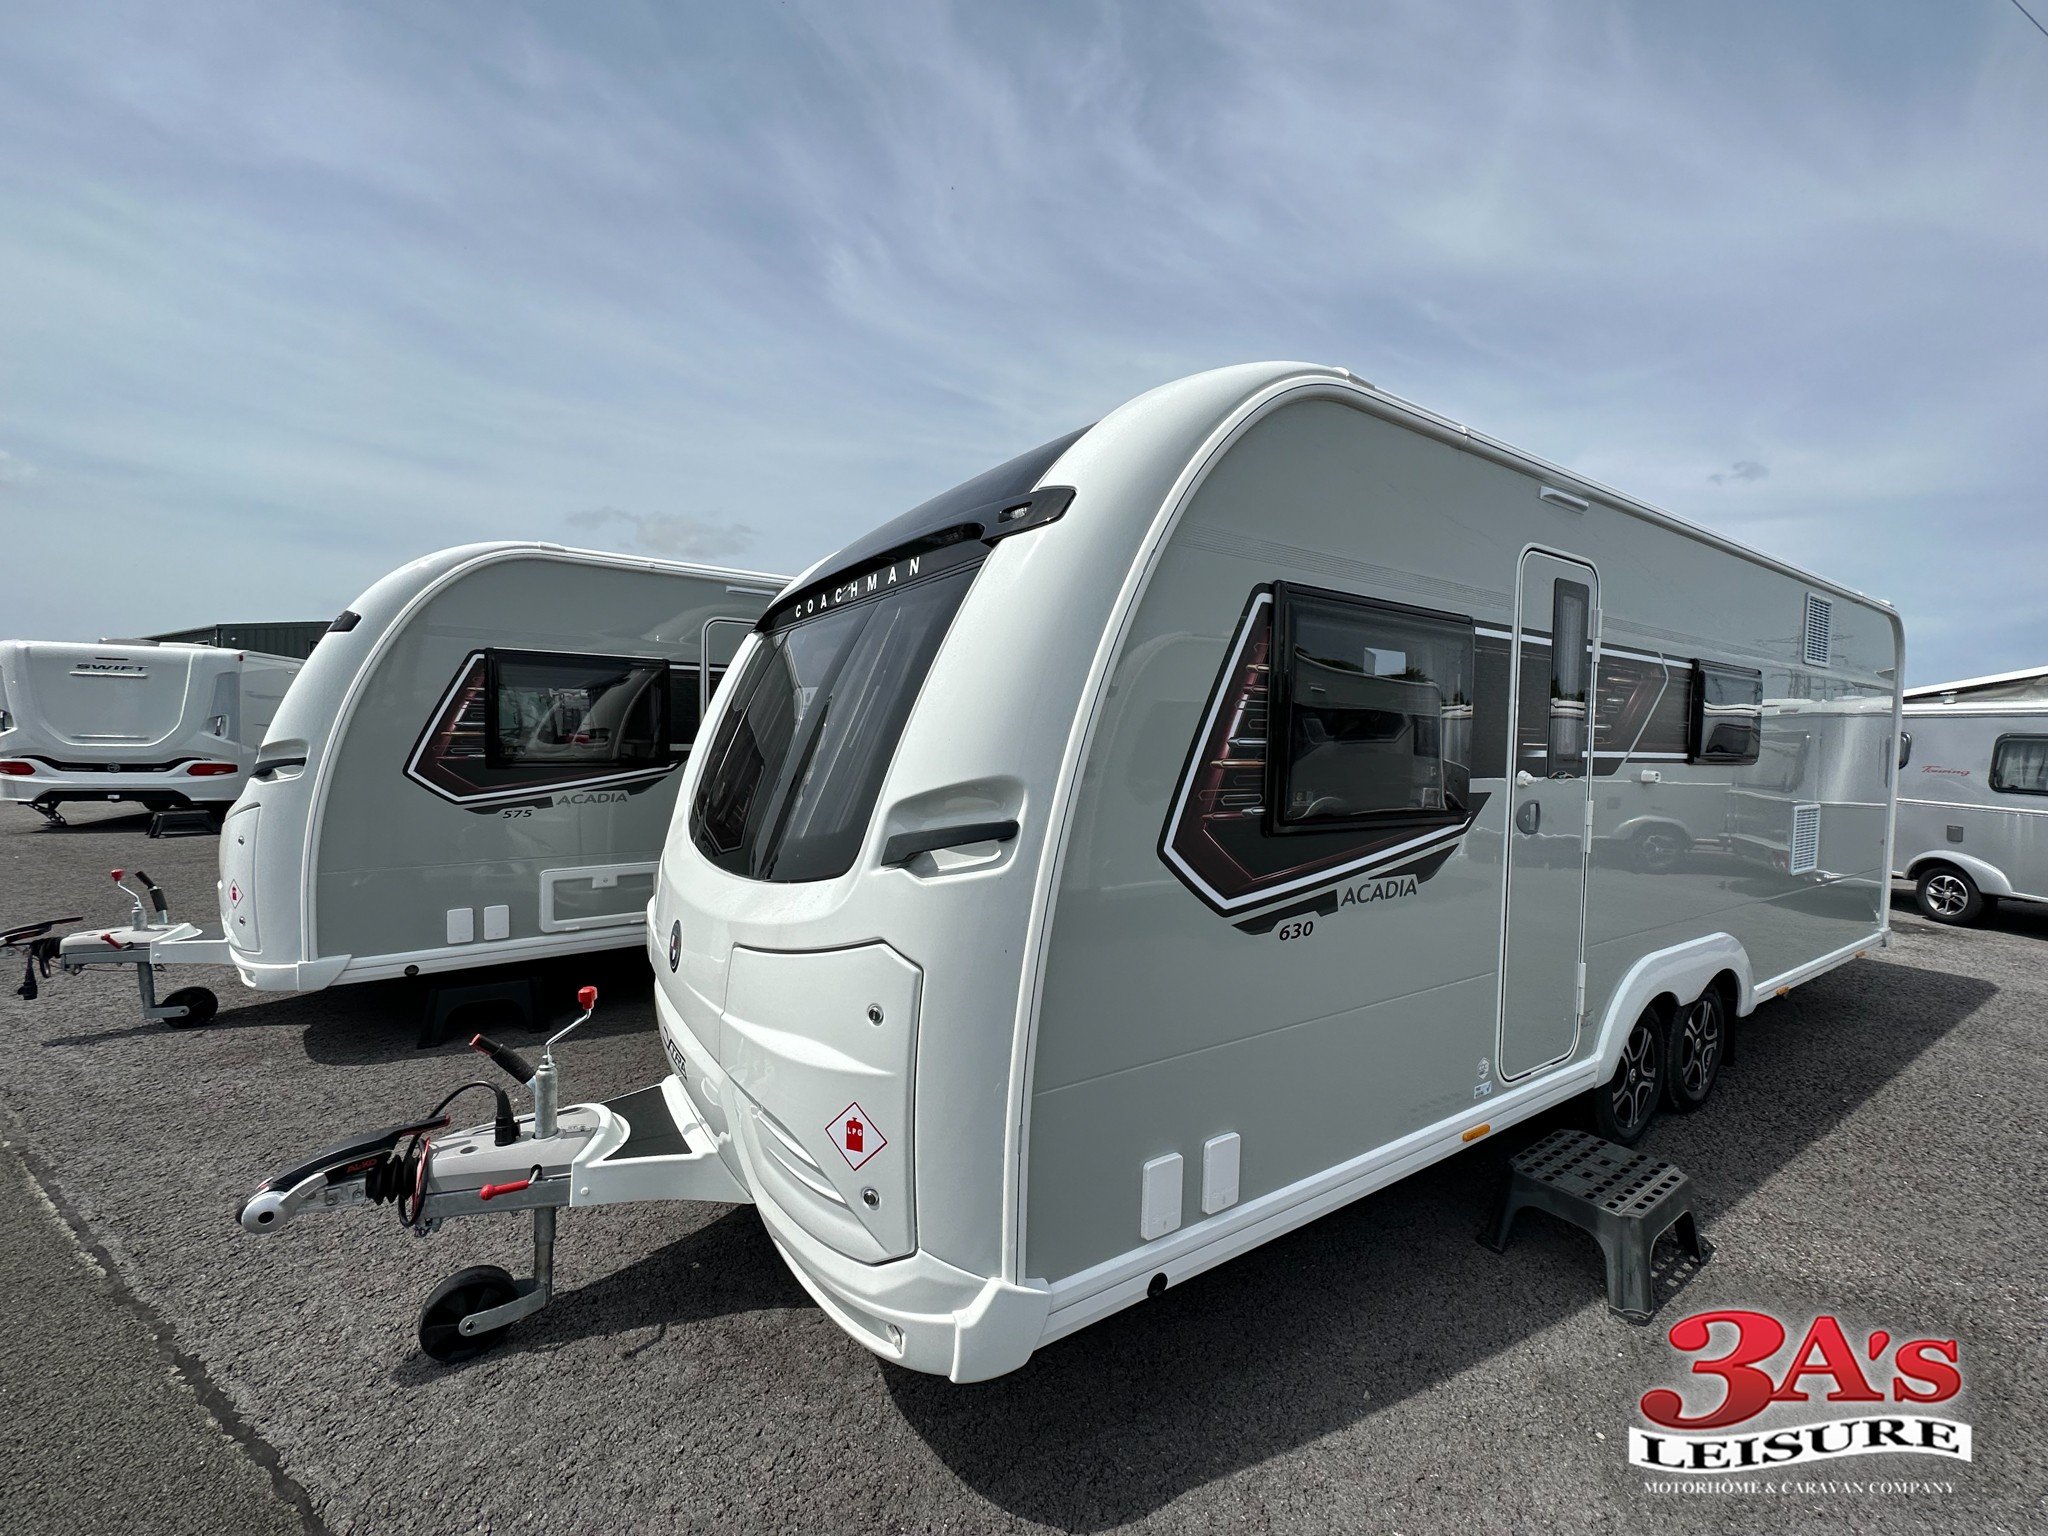 New Coachman Caravans for Sale